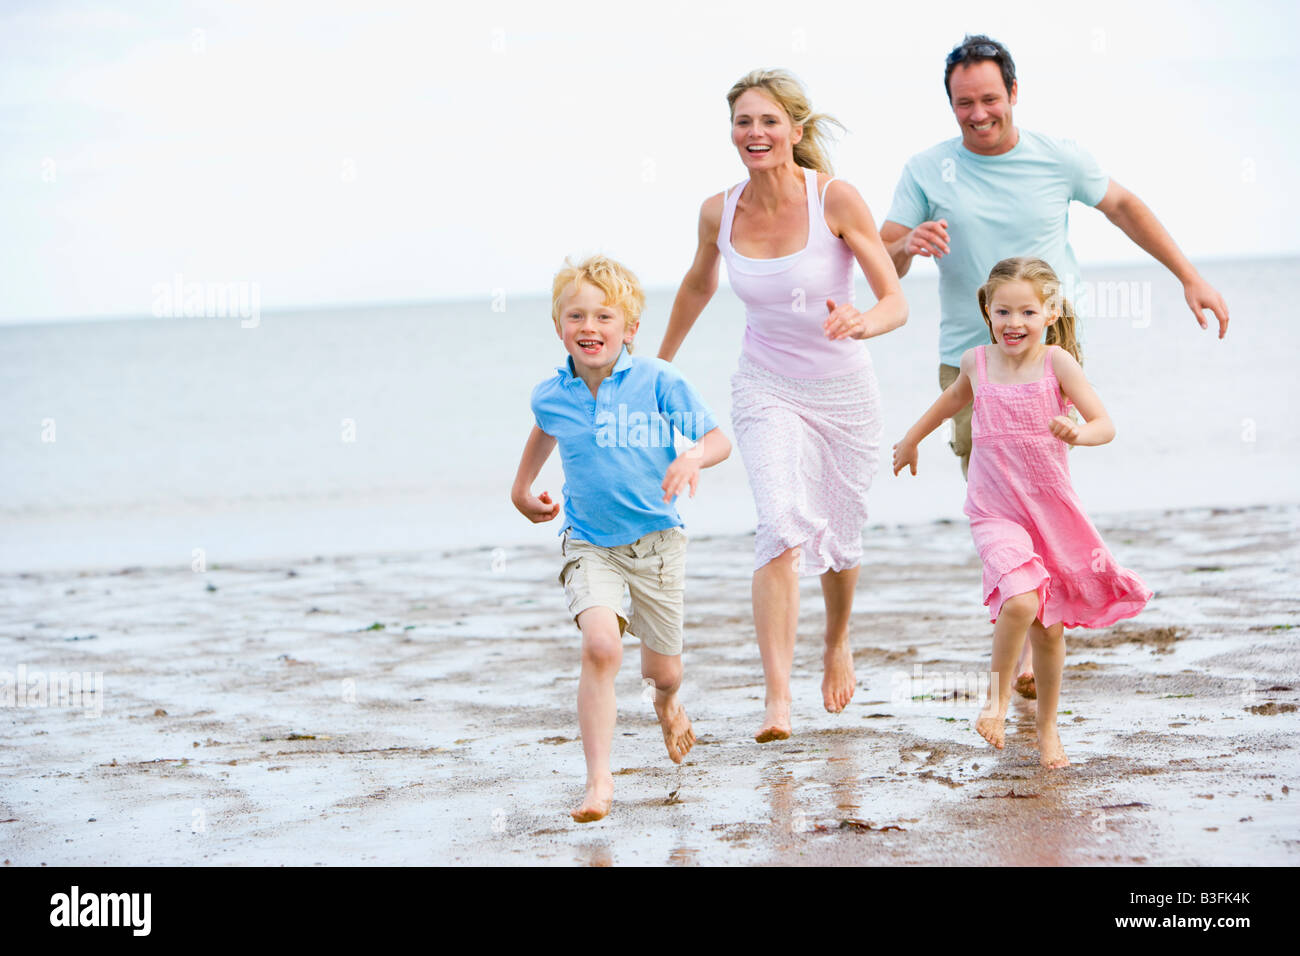 Family running on beach smiling Stock Photo